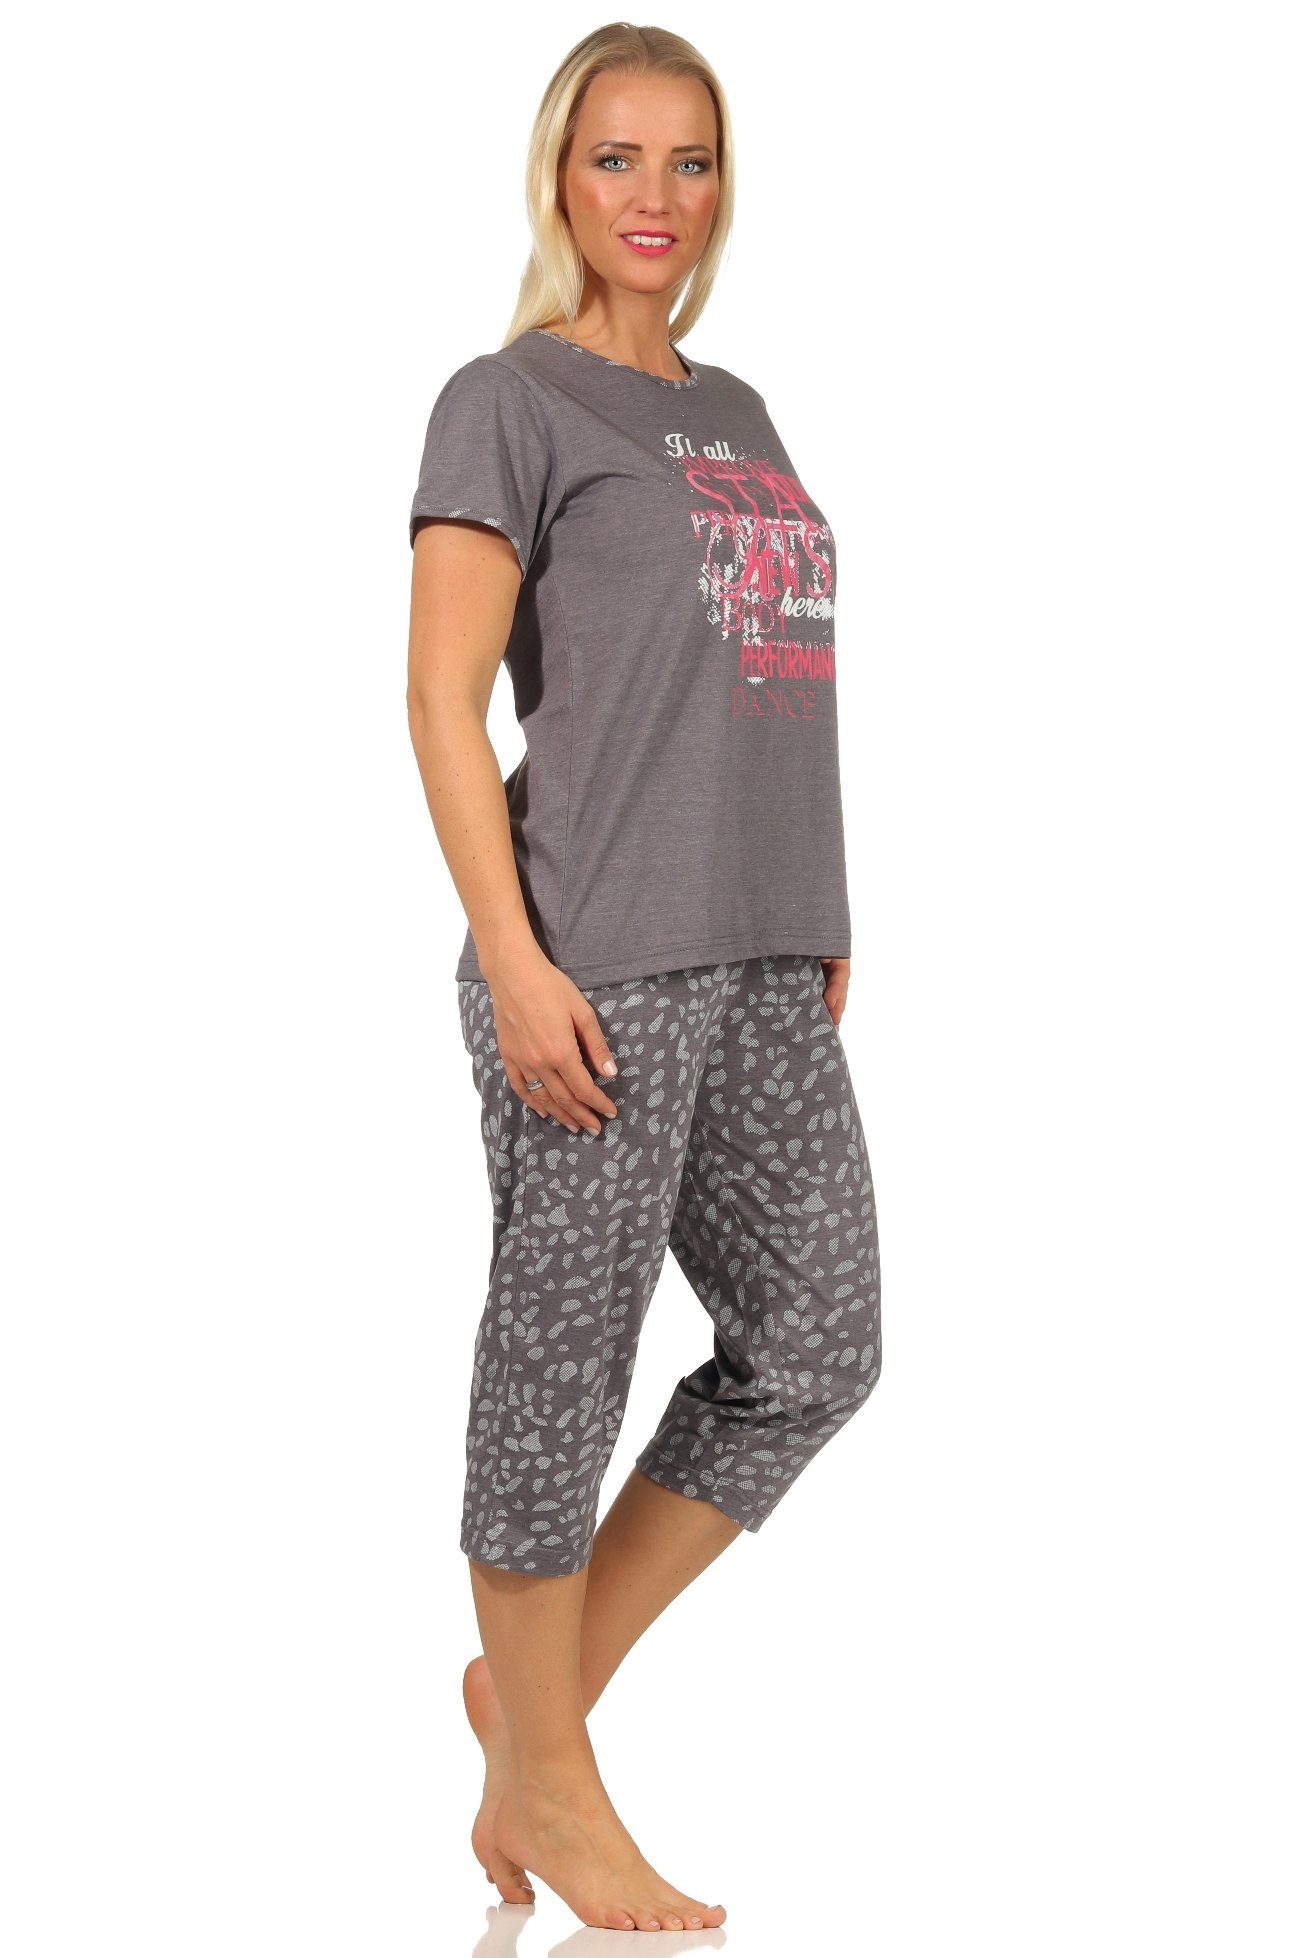 grau Normann by und Capri RELAX Pyjama Damen mit kurzarm Frontprint tollem Caprihose Schlafanzug